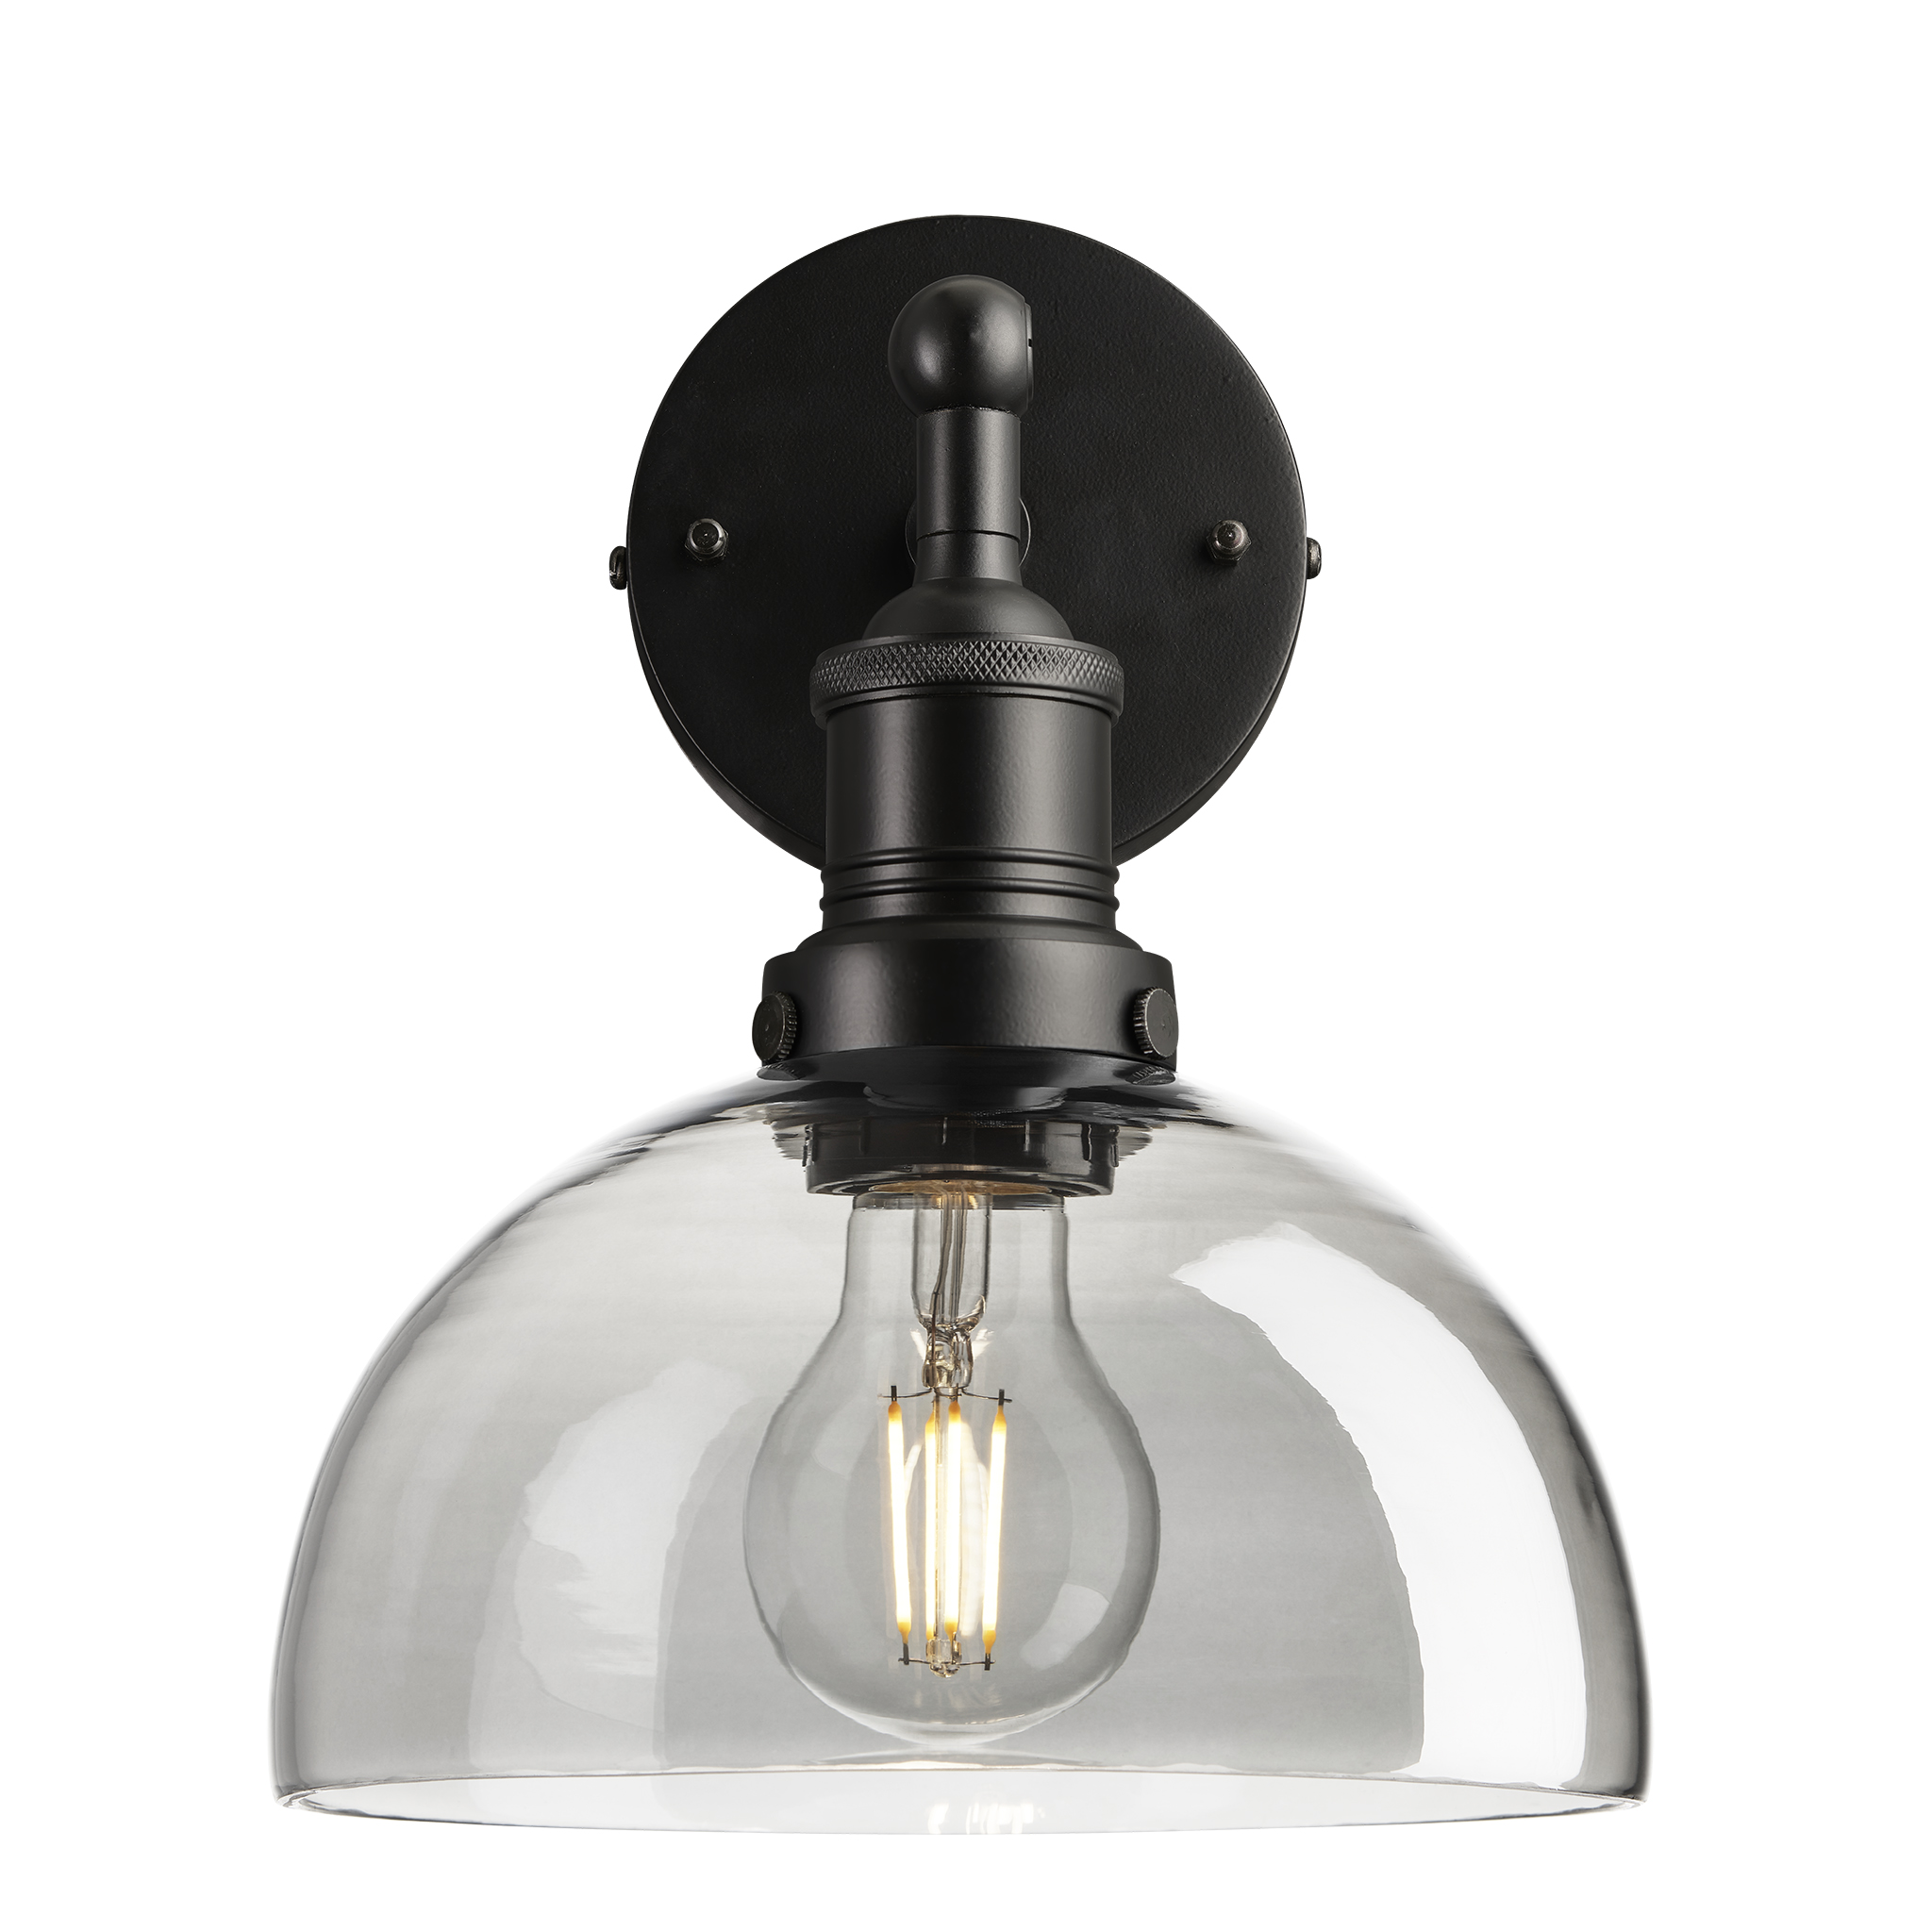 Brooklyn Tinted Glass Dome Wall Light - 8 Inch - Smoke Grey - Black Holder 